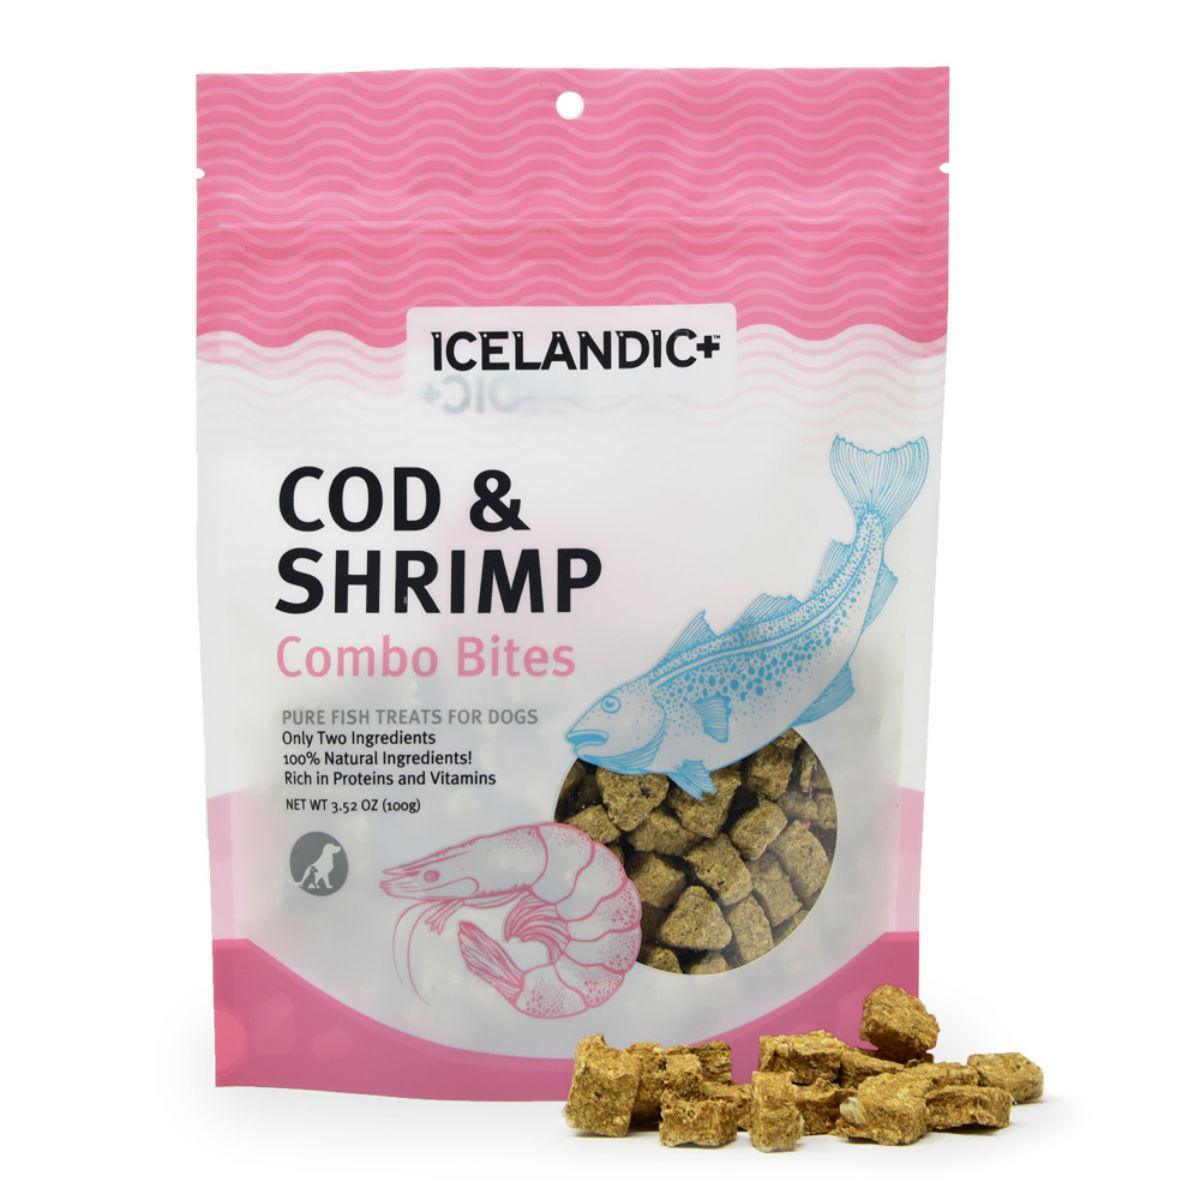 Icelandic+ Cod & Shrimp Combo Bites Fish Dog Treat 3.52-oz Bag - Rocky & Maggie's Pet Boutique and Salon